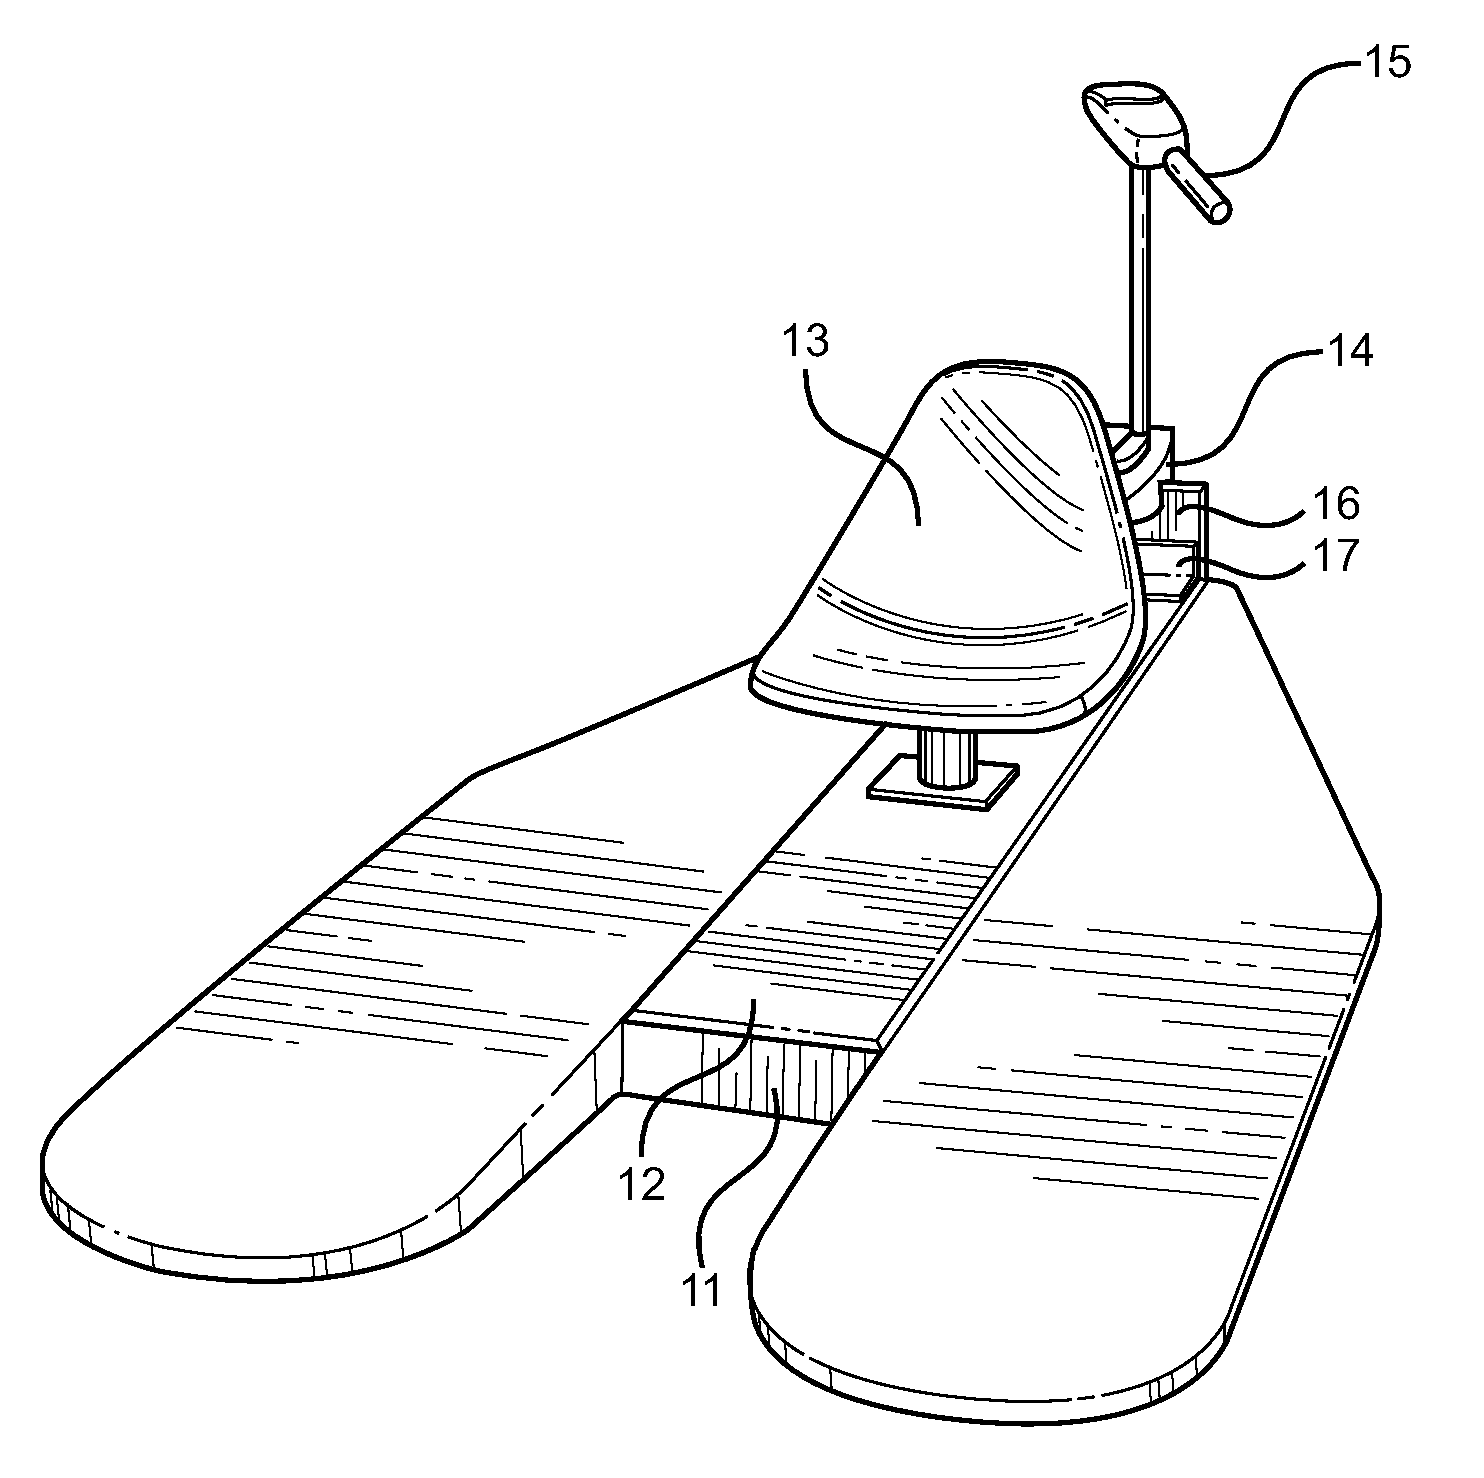 Lightweight personal hydroplane watercraft